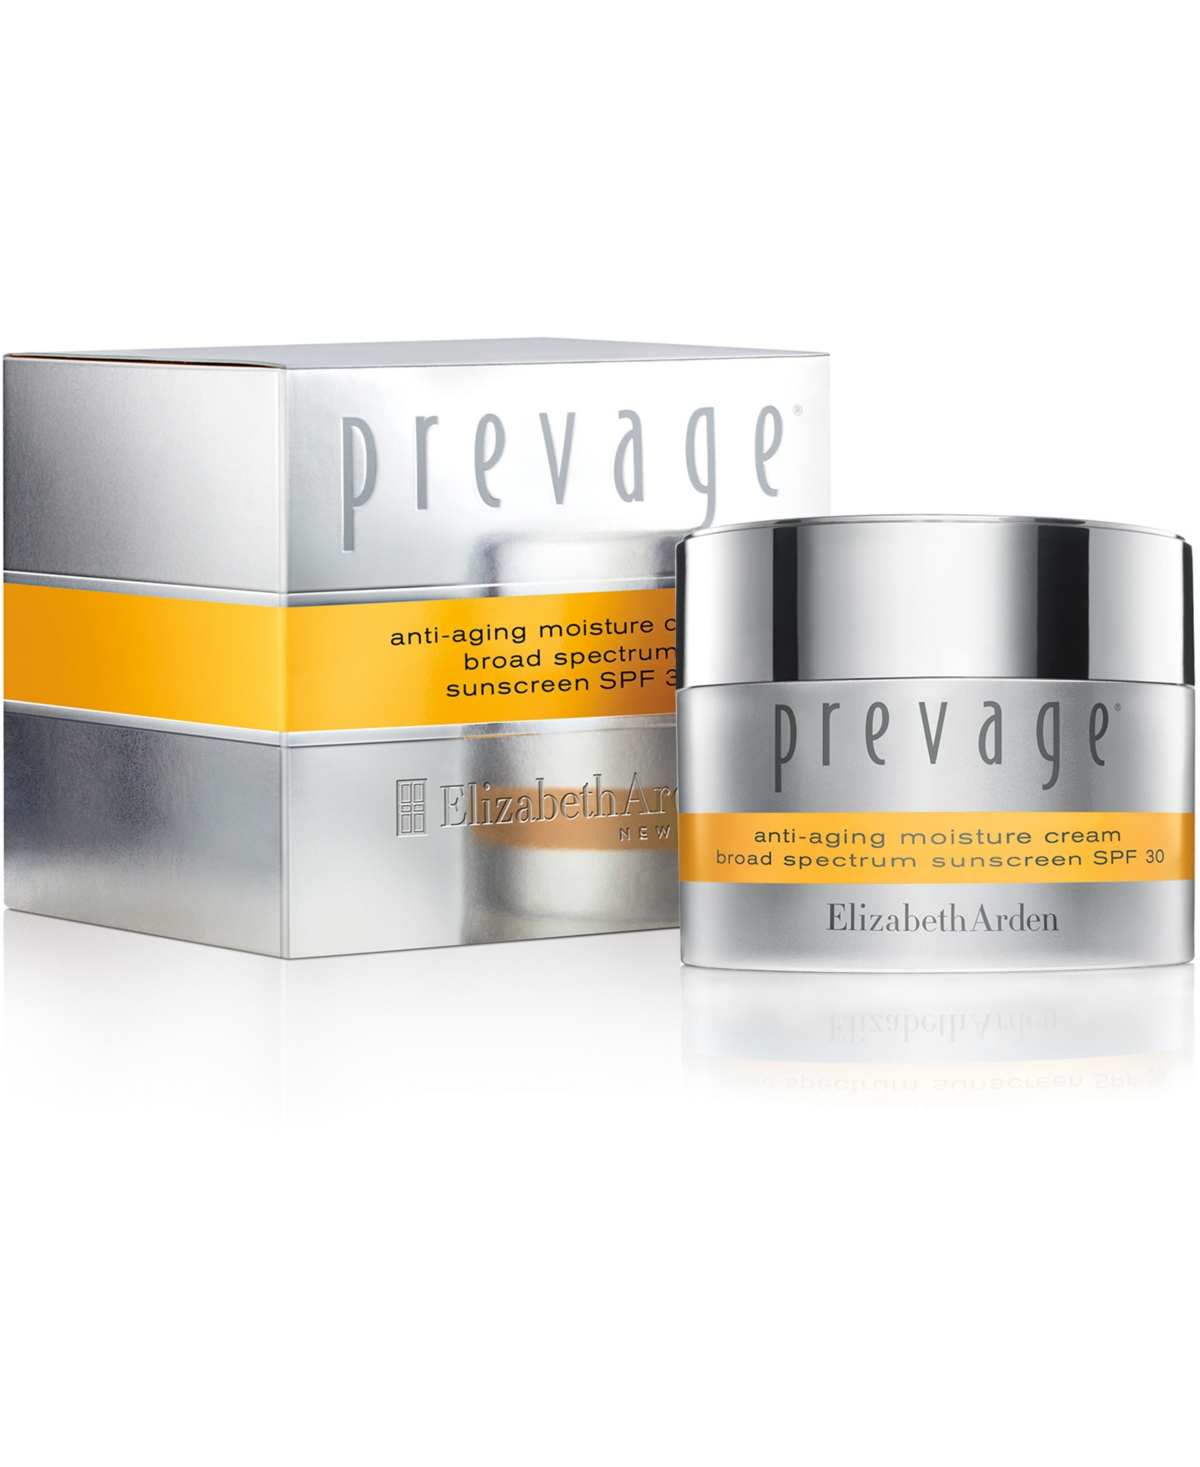 Prevage Anti-aging Moisture Cream Broad Spectrum Sunscreen Spf 30, 1.7 oz.